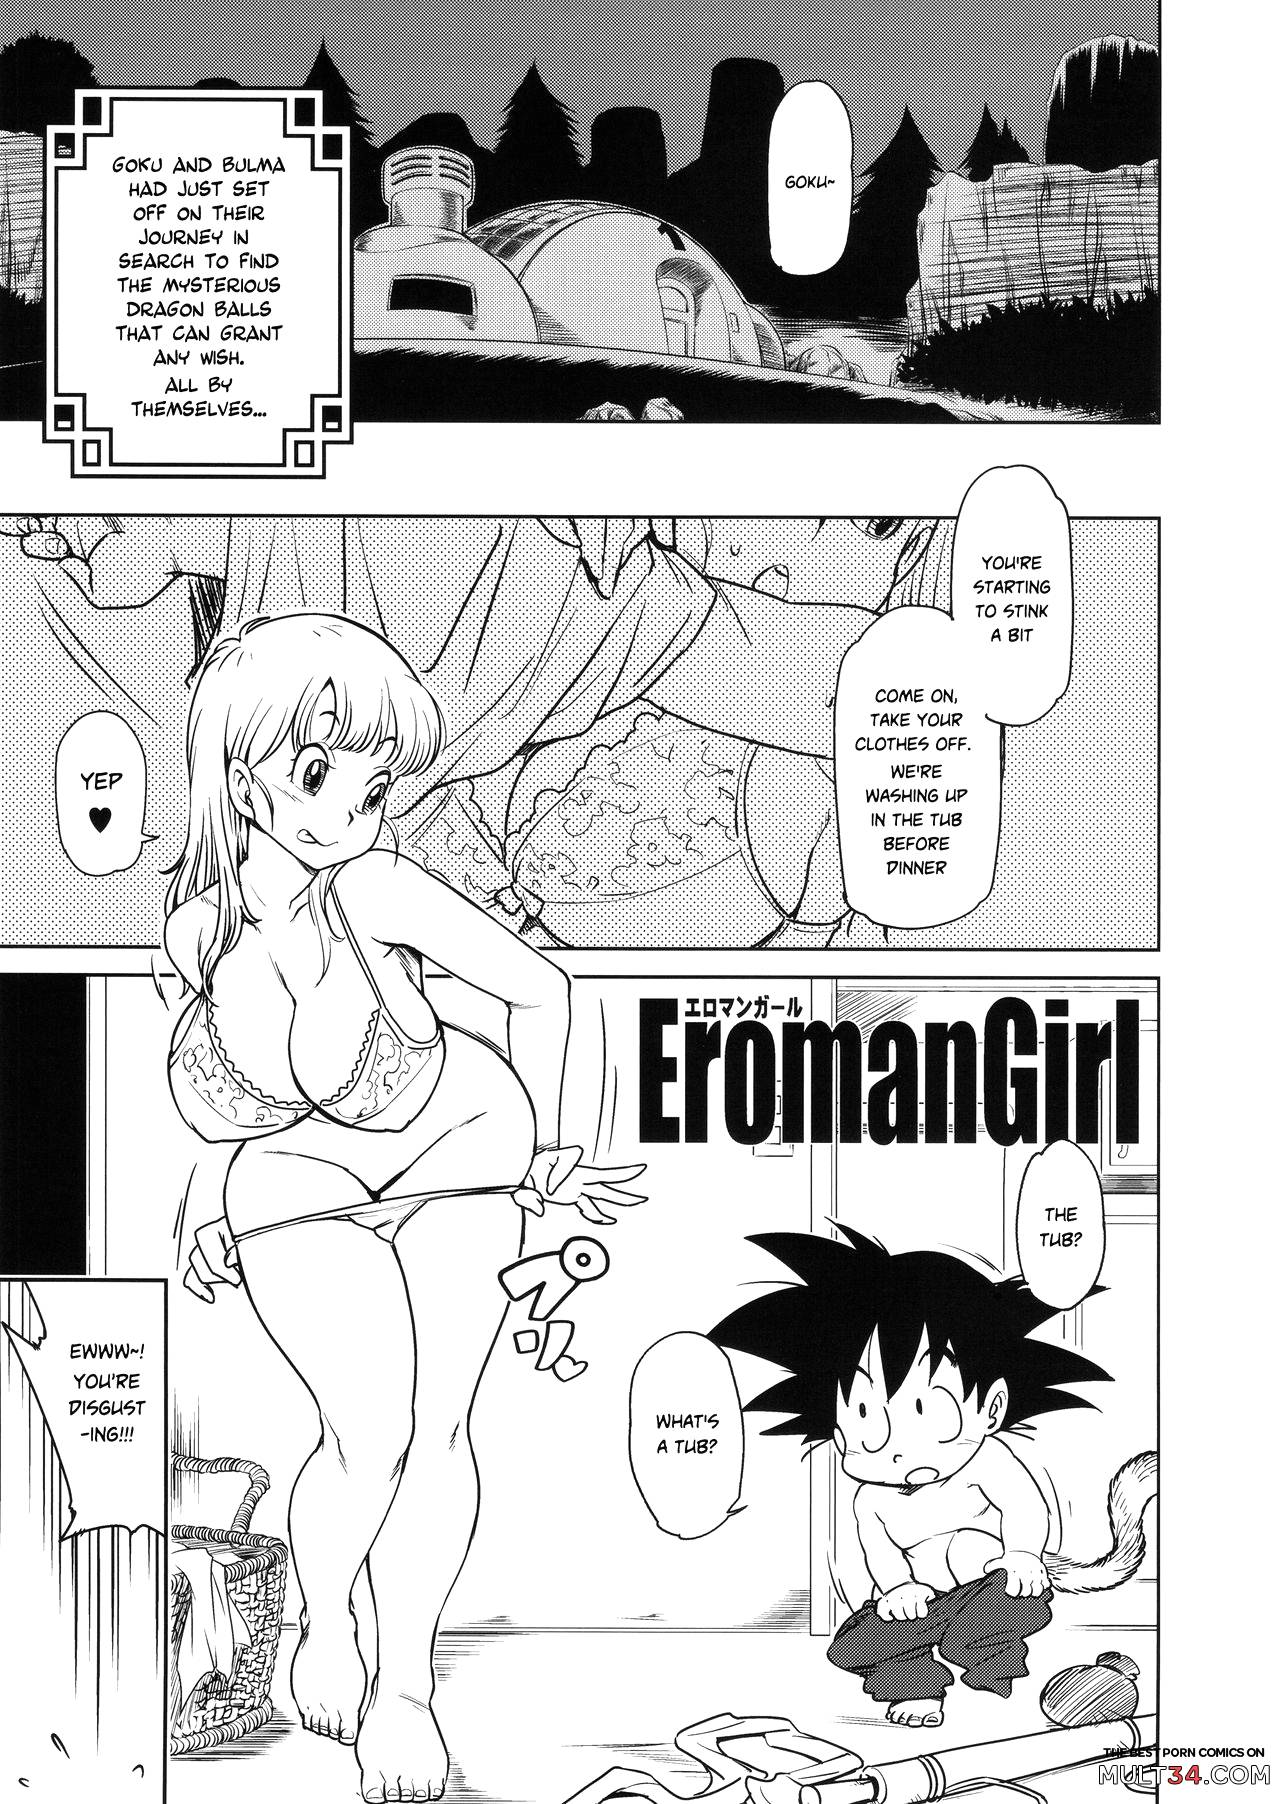 Porno anime goku y bulma comic